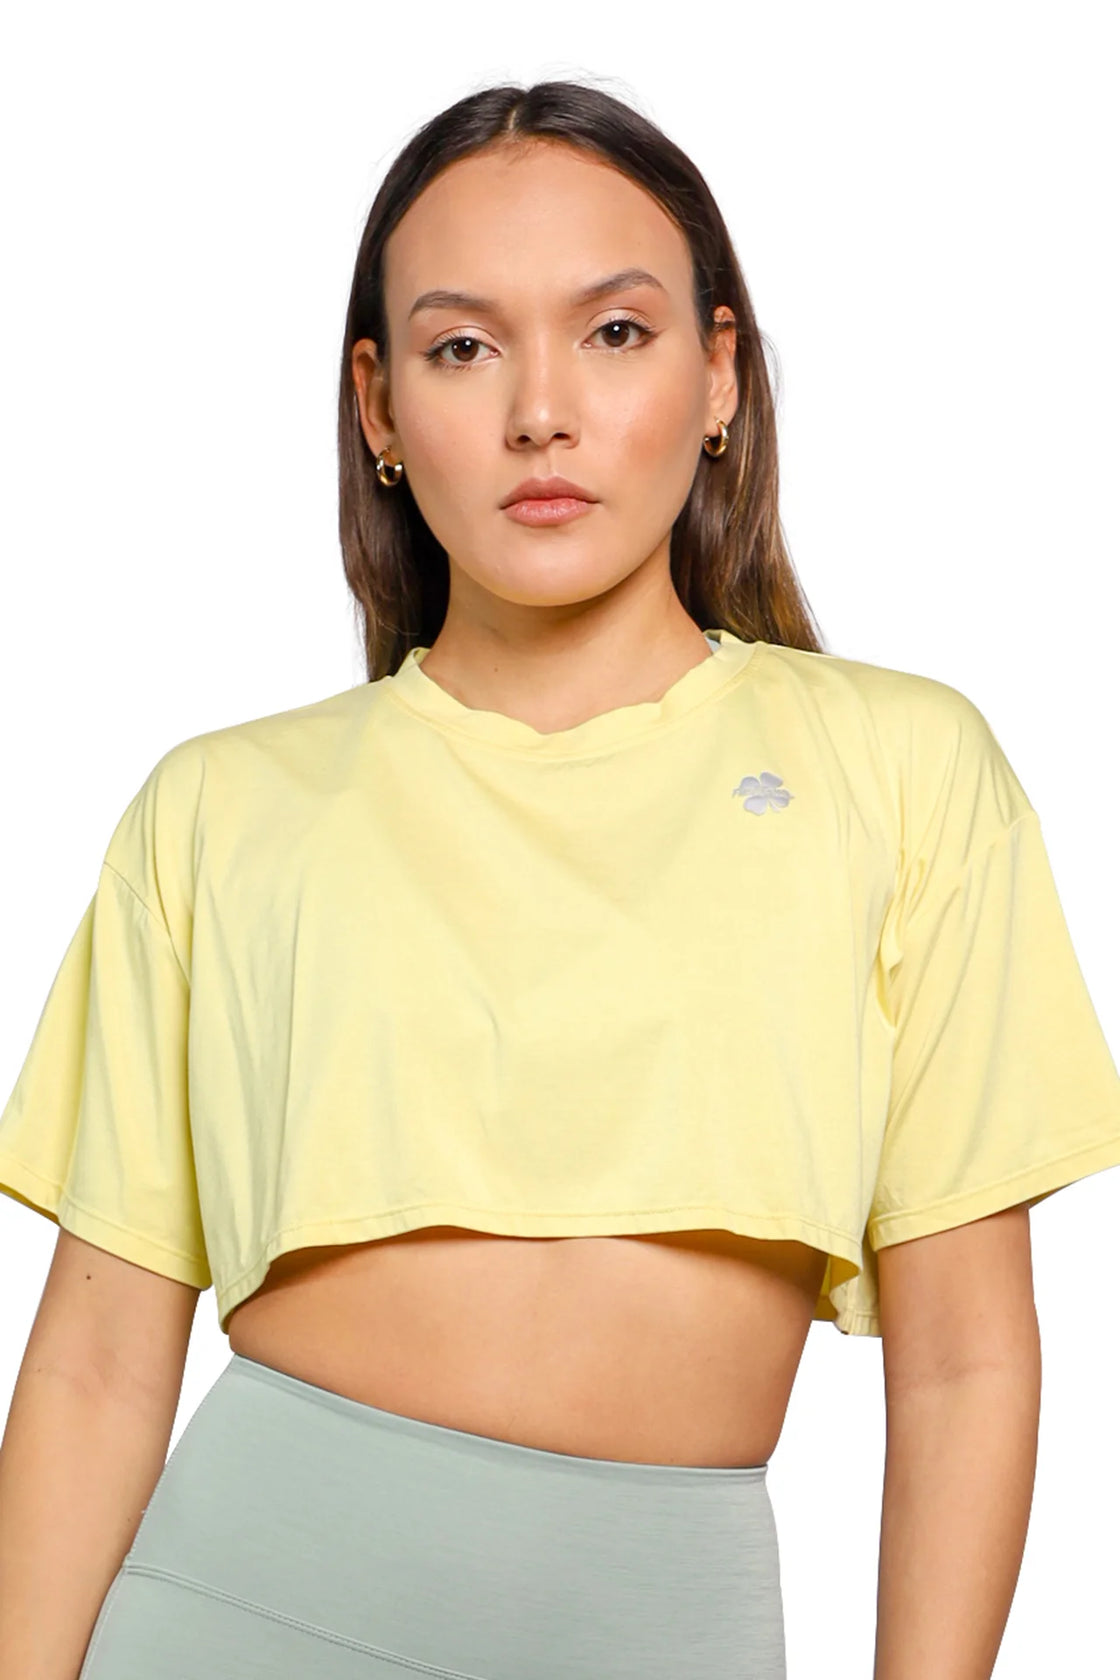 Crop top t-shirt in yellow